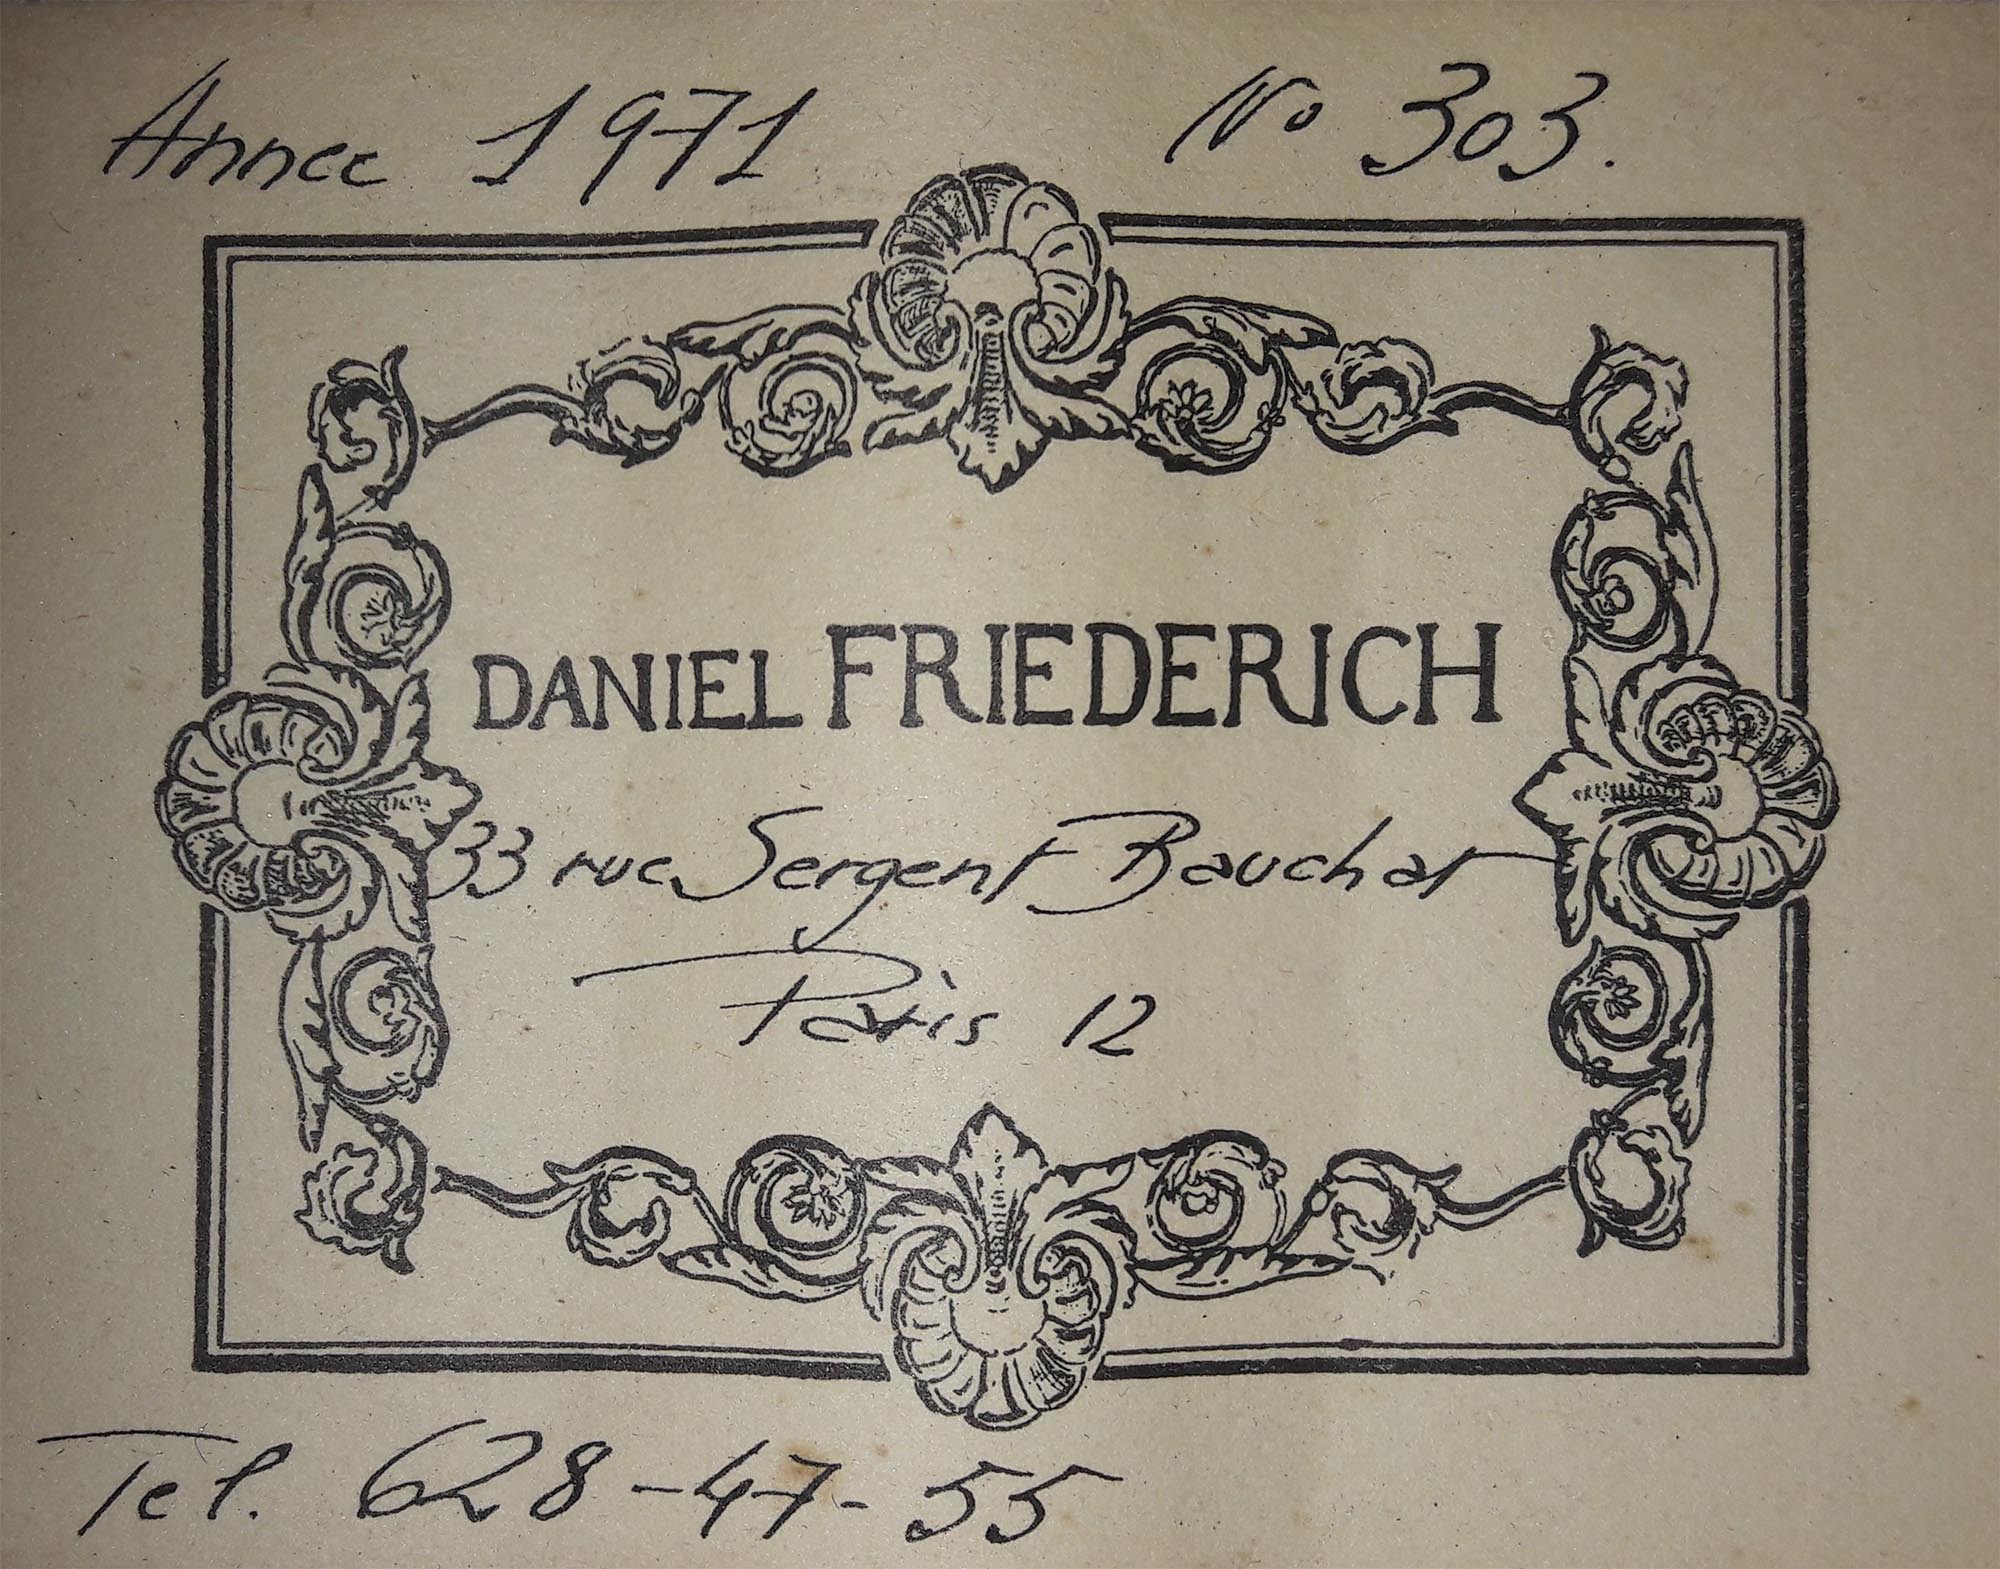 Daniel friederich 1971 25092018 label